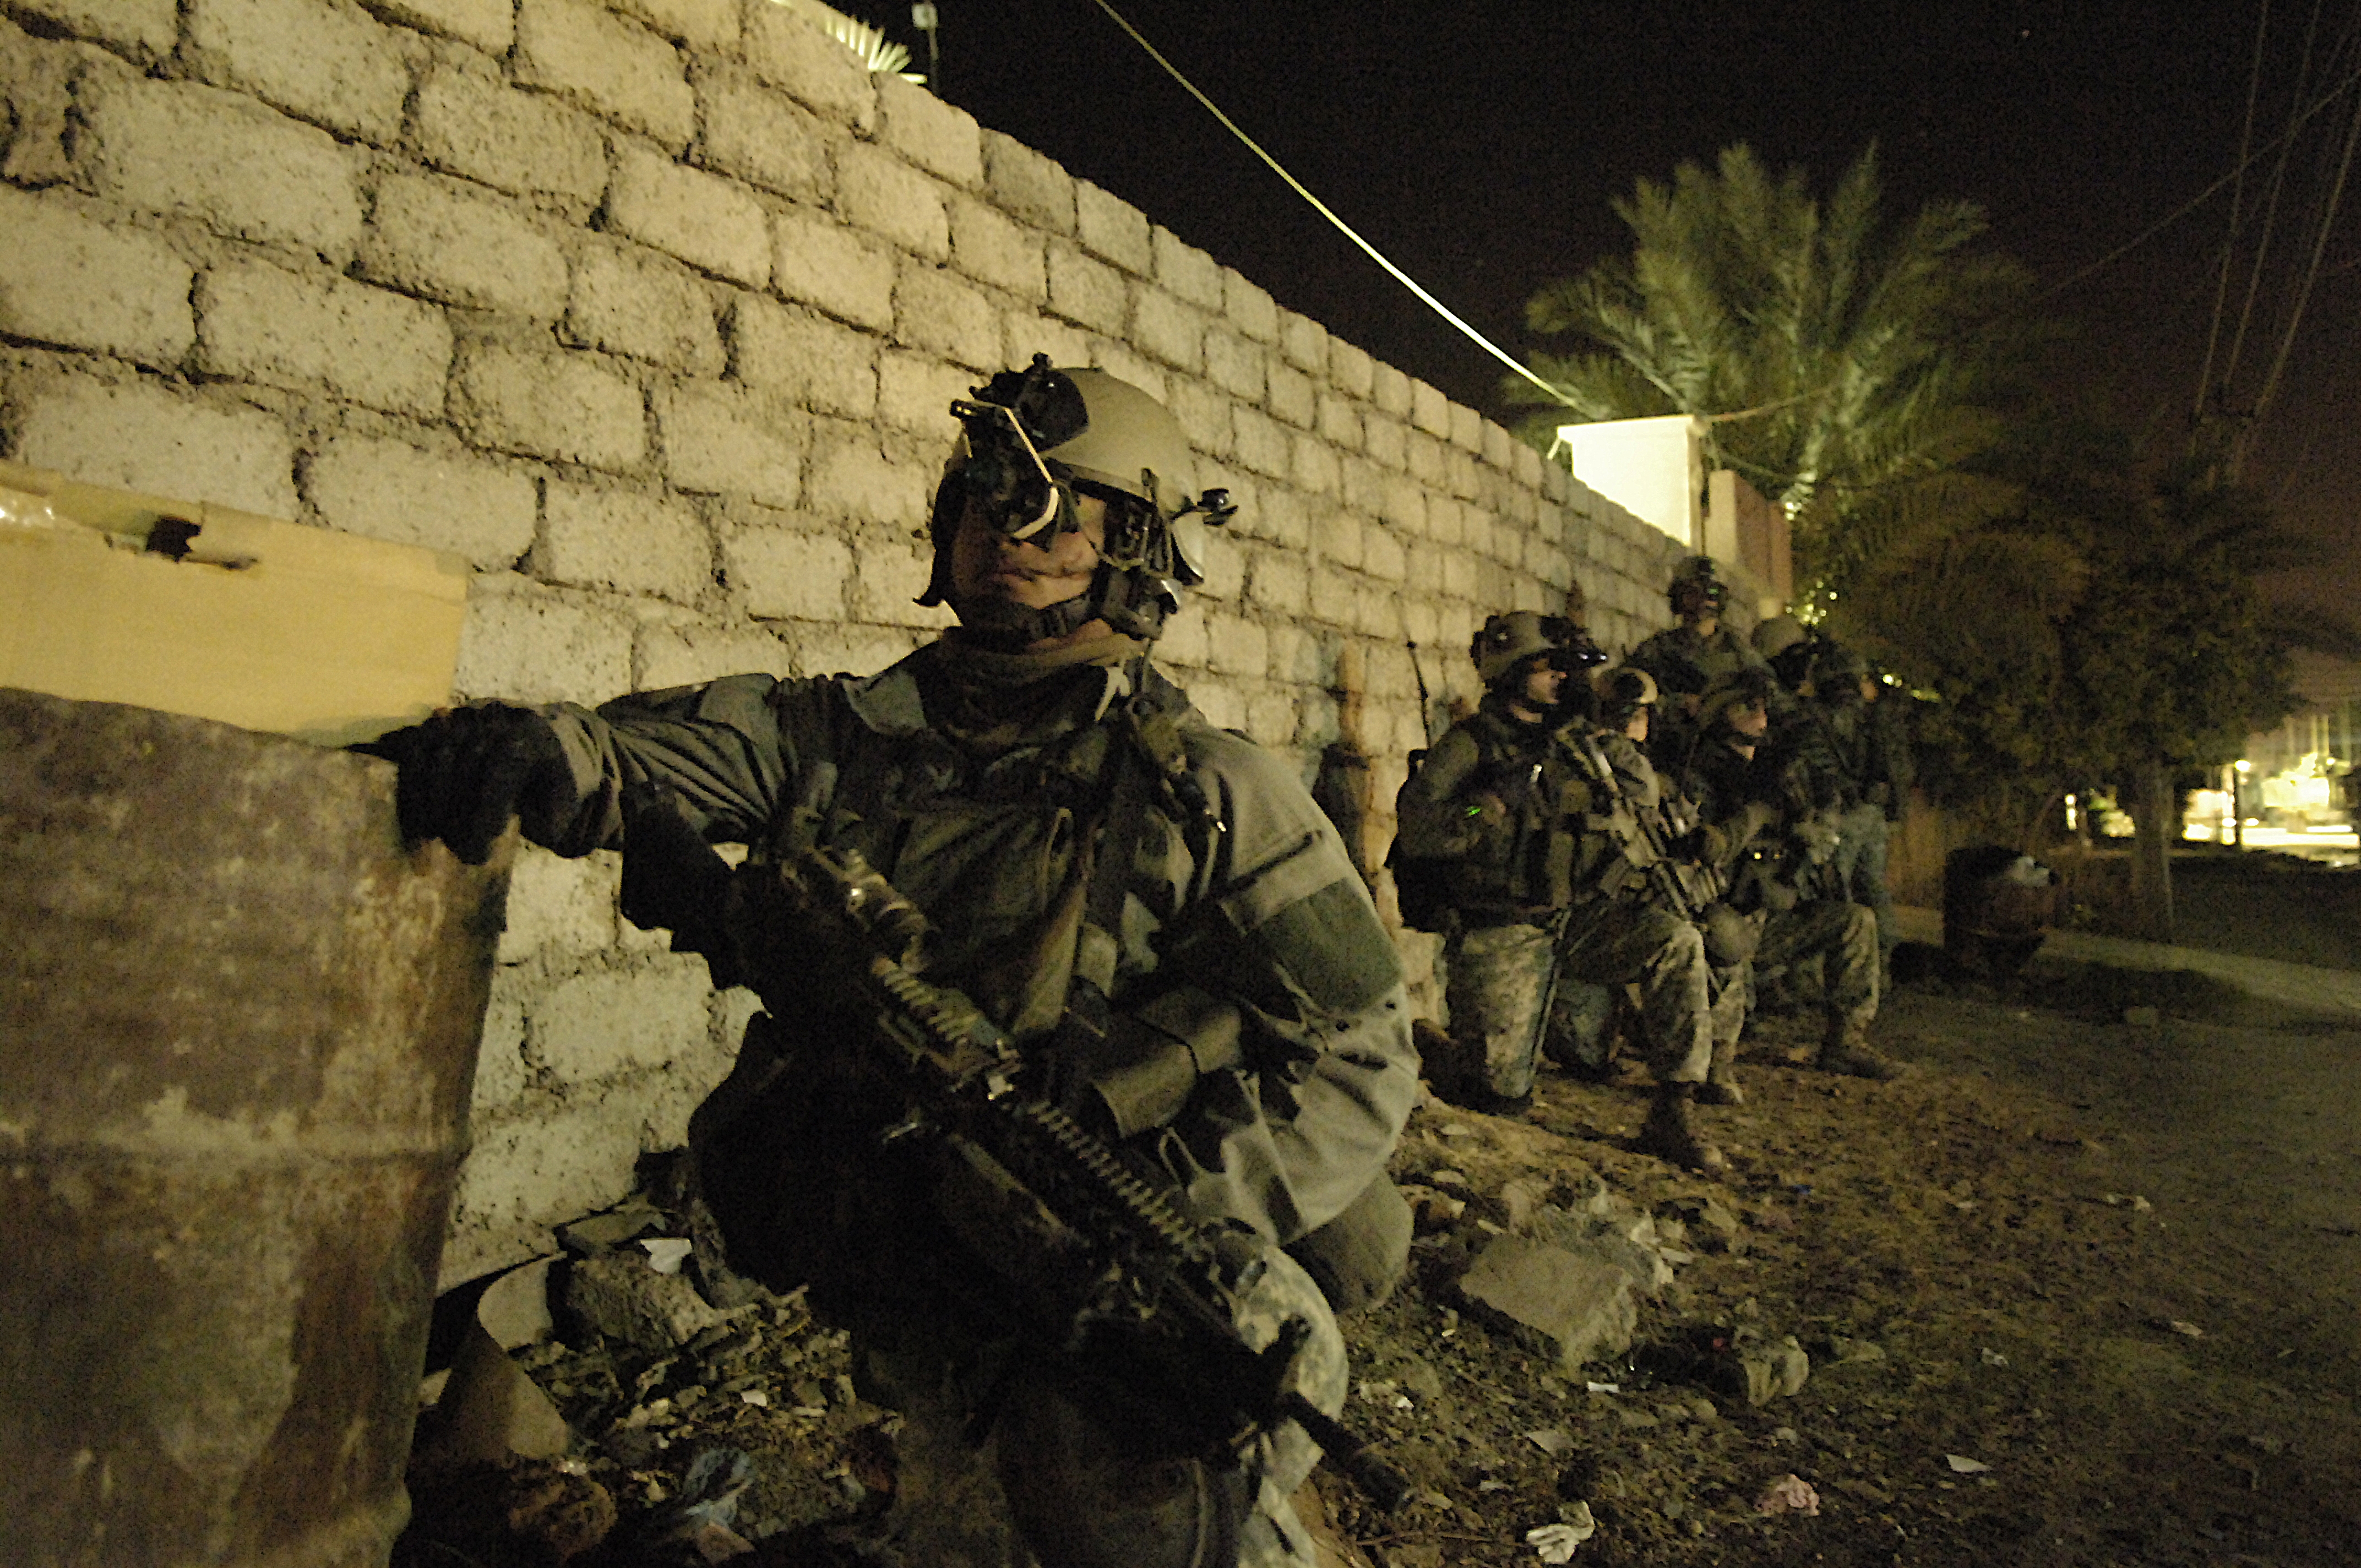 75th Ranger Regiment Conducting Operations in Iraq, 26 April 2007